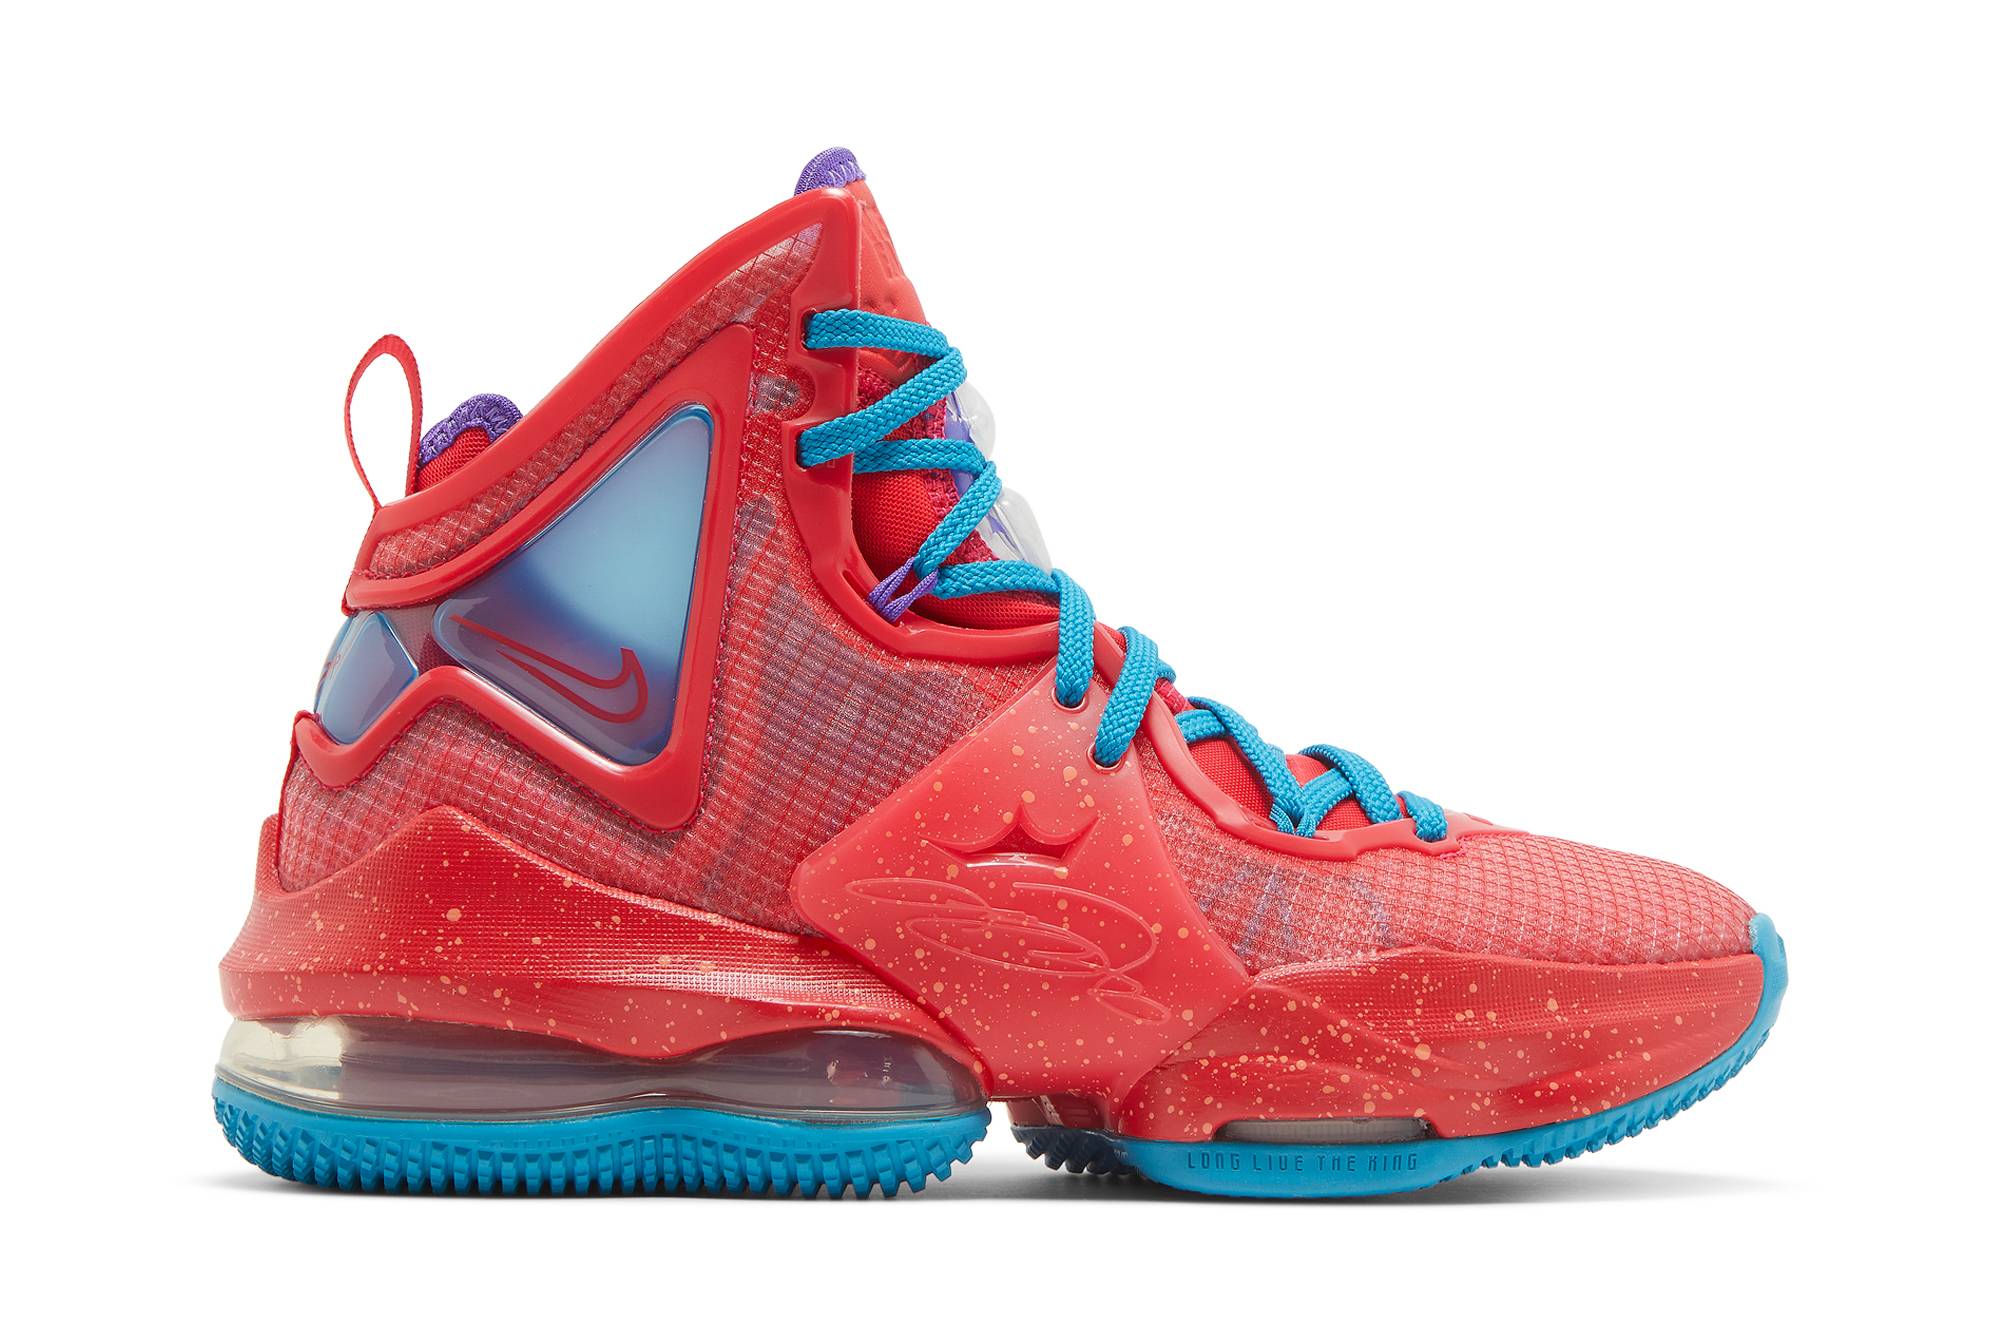 Nike Lebron James Youth Basketball Shoes | Youth basketball shoes,  Basketball shoes, Lebron james